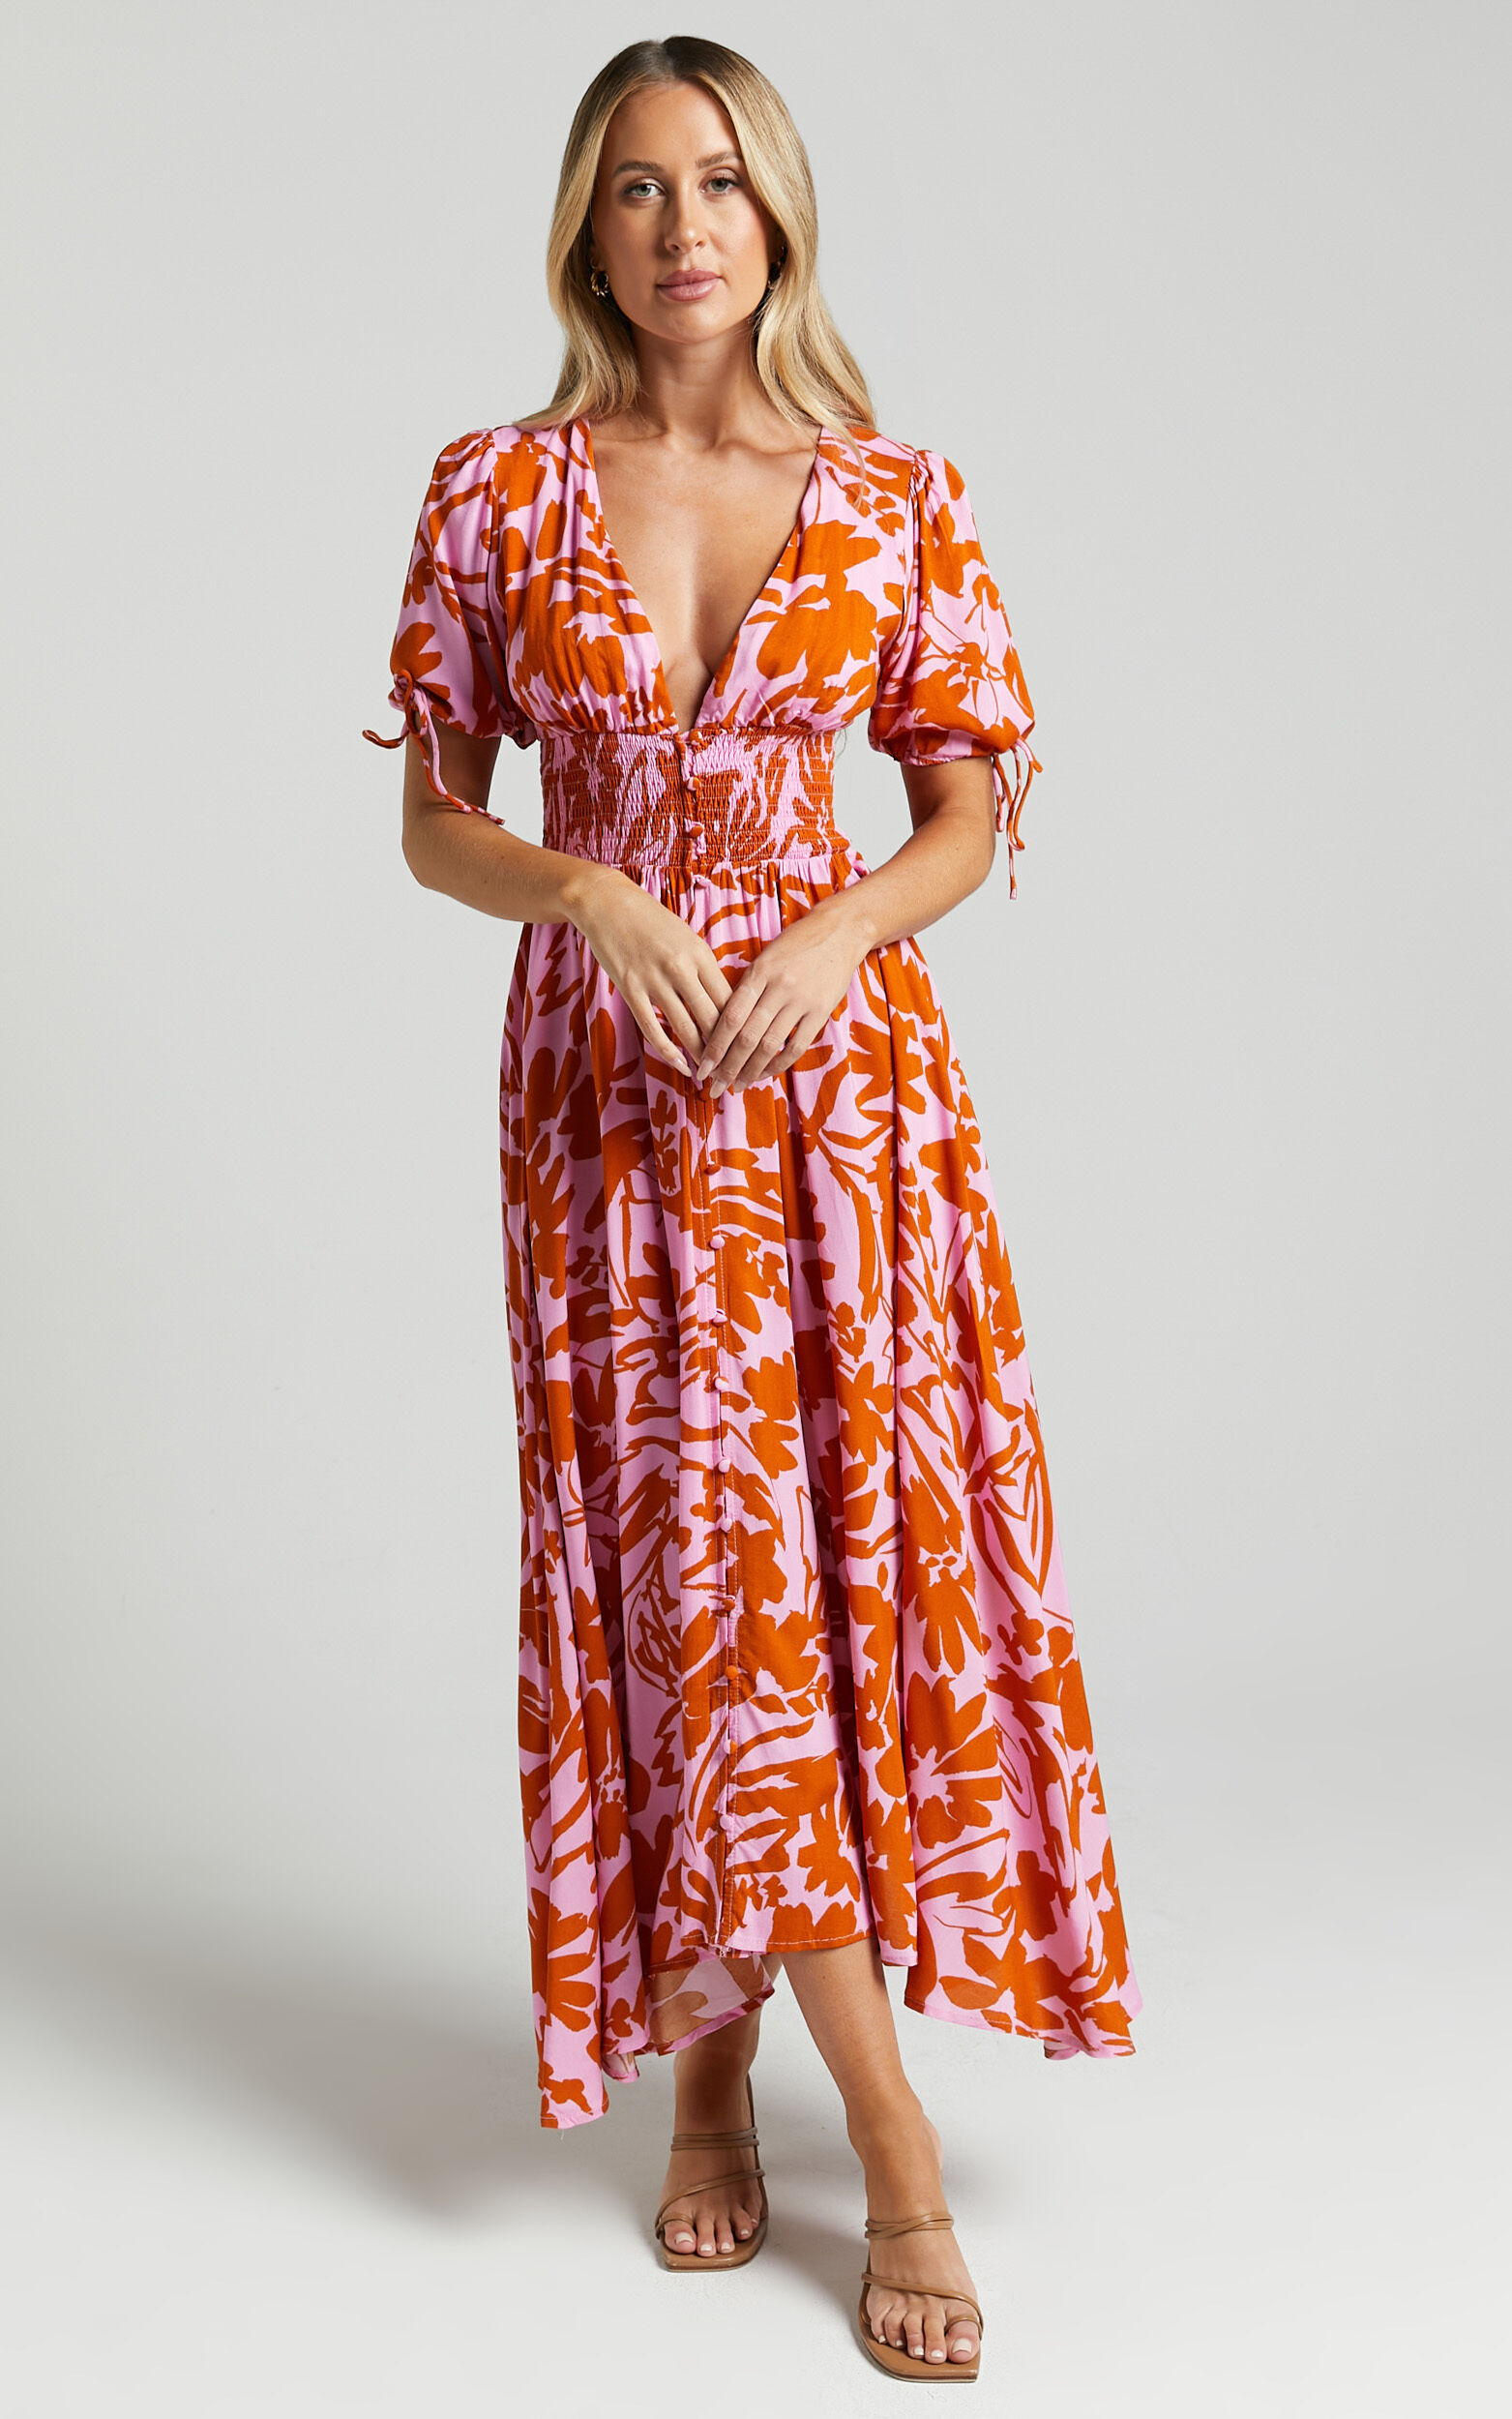 Gweeny Midi Dress - V Neck Tie Short Sleeve Dress in Rust Floral - 06, BRN1